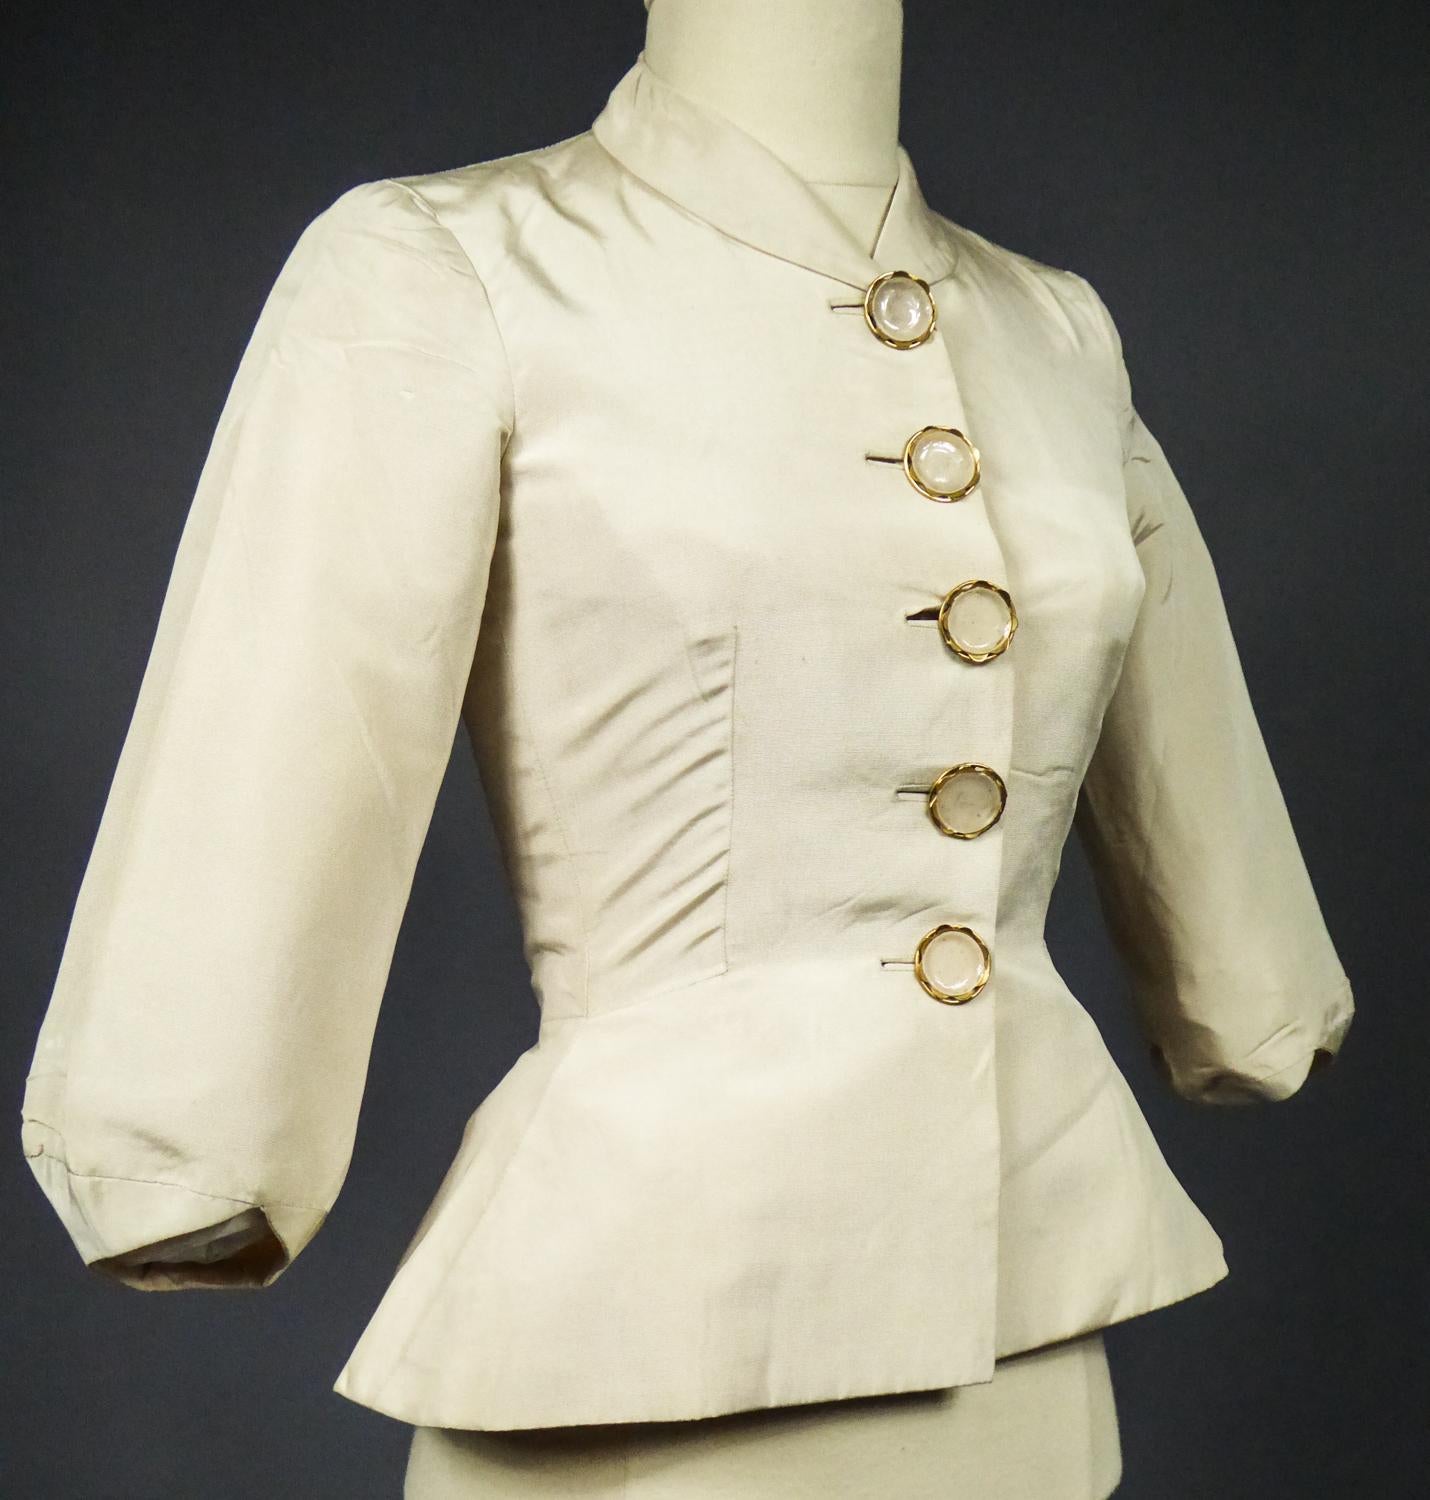 Women's An Elsa Schiaparelli Bar Jacket in Cream Silk Numbered 89254 Circa 1947-1950